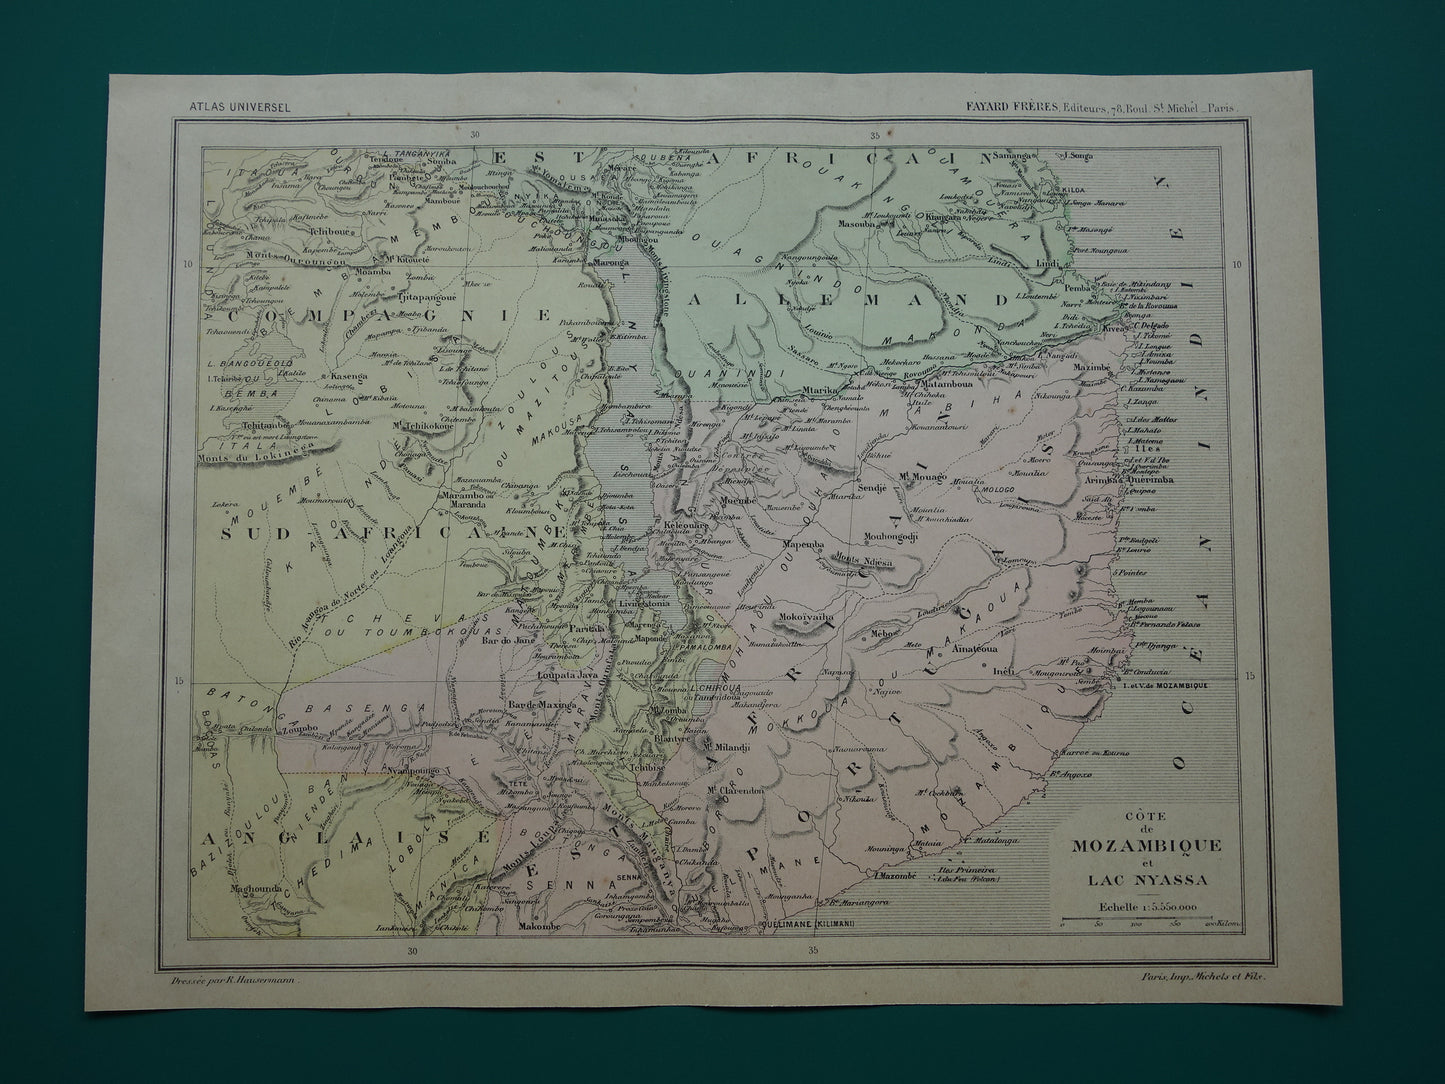 Mozambique Oude kaart van Mozambique Malawimeer uit 1896 antieke handgekleurde landkaart Lake Malawi